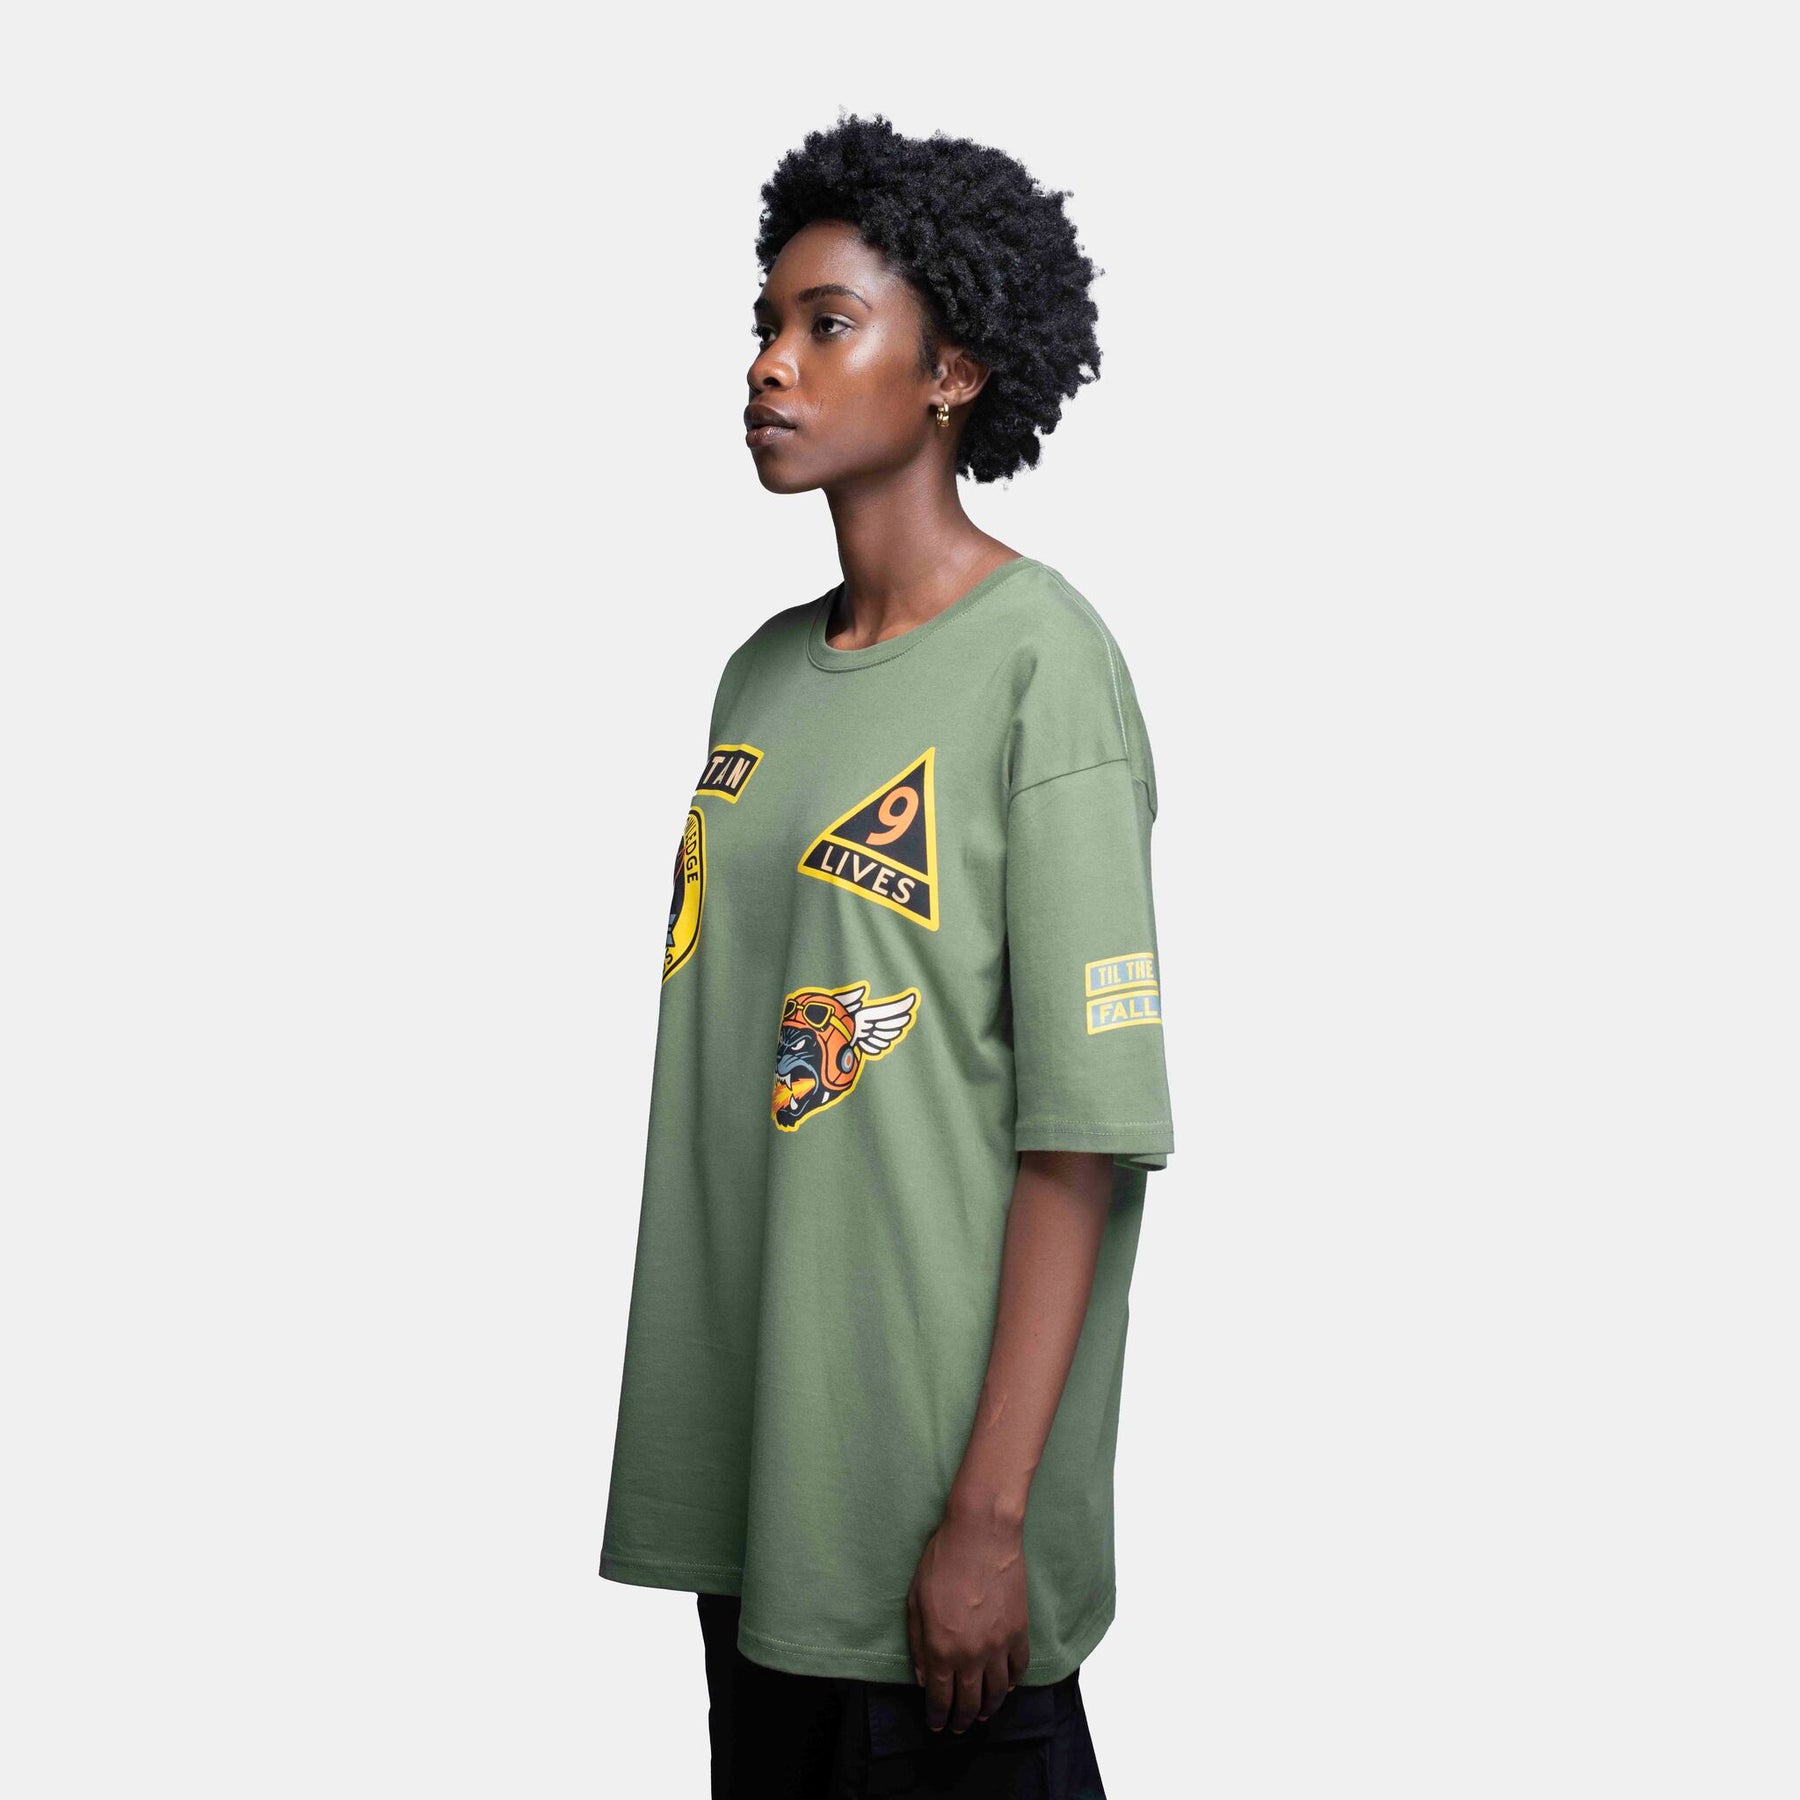 Butan Panthers | Bombshell T-shirt | Olive